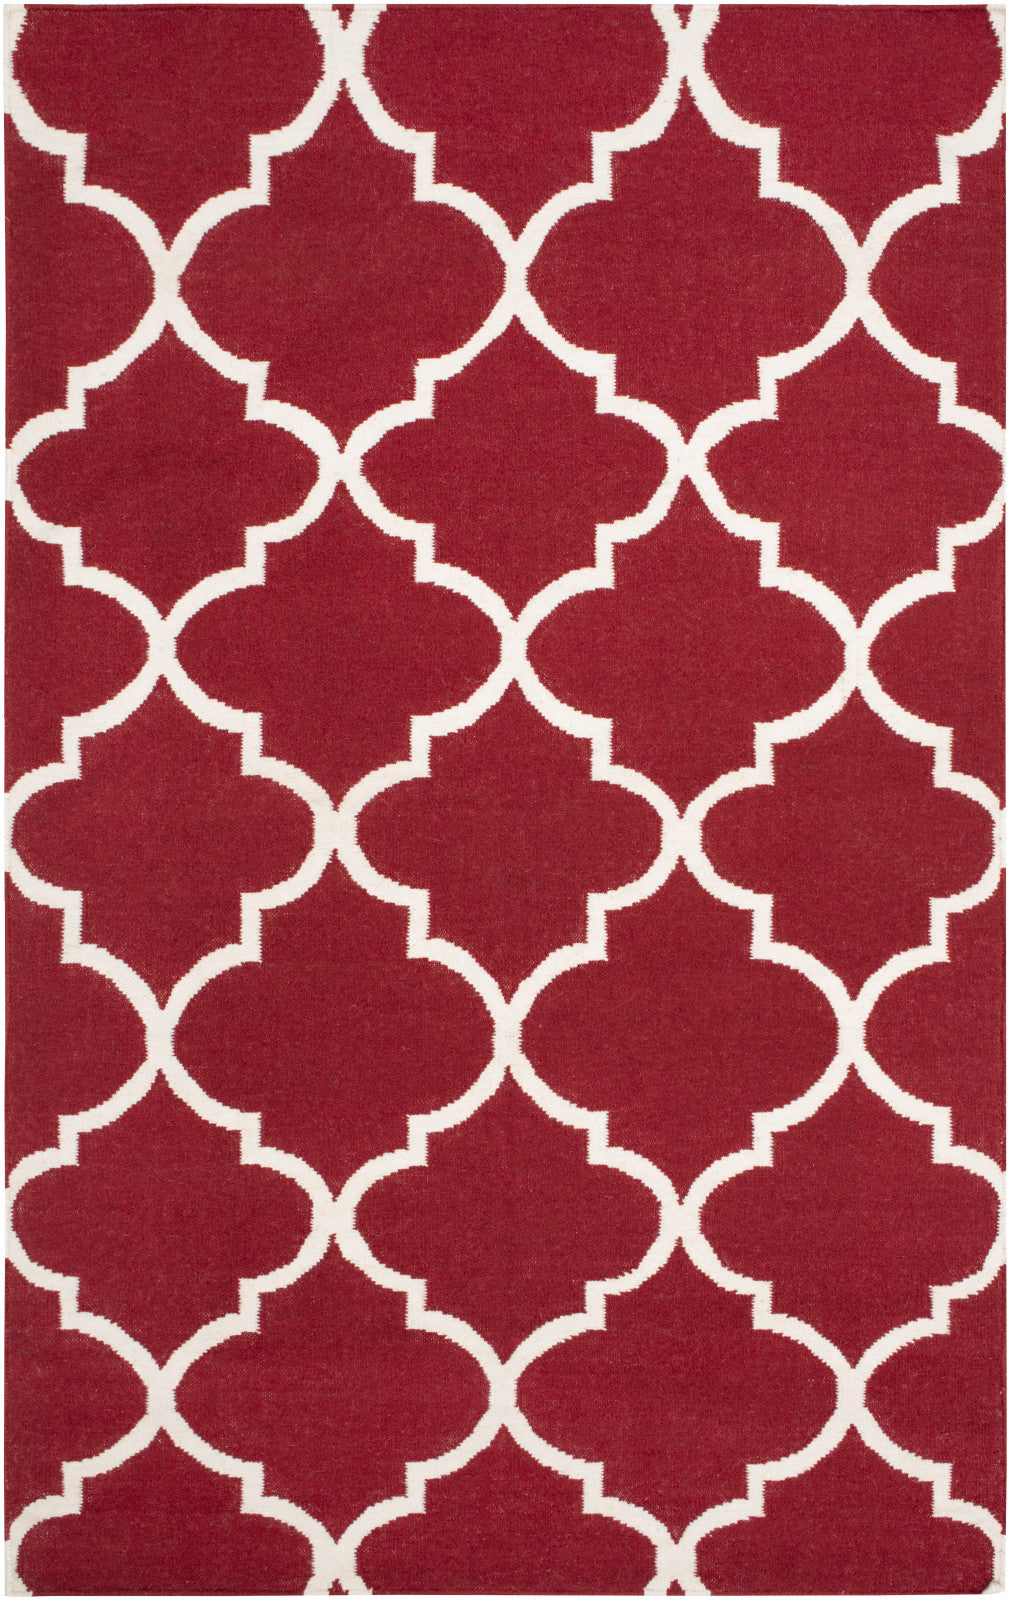 Artistic Weavers York Mallory Crimson Red/Ivory Area Rug main image